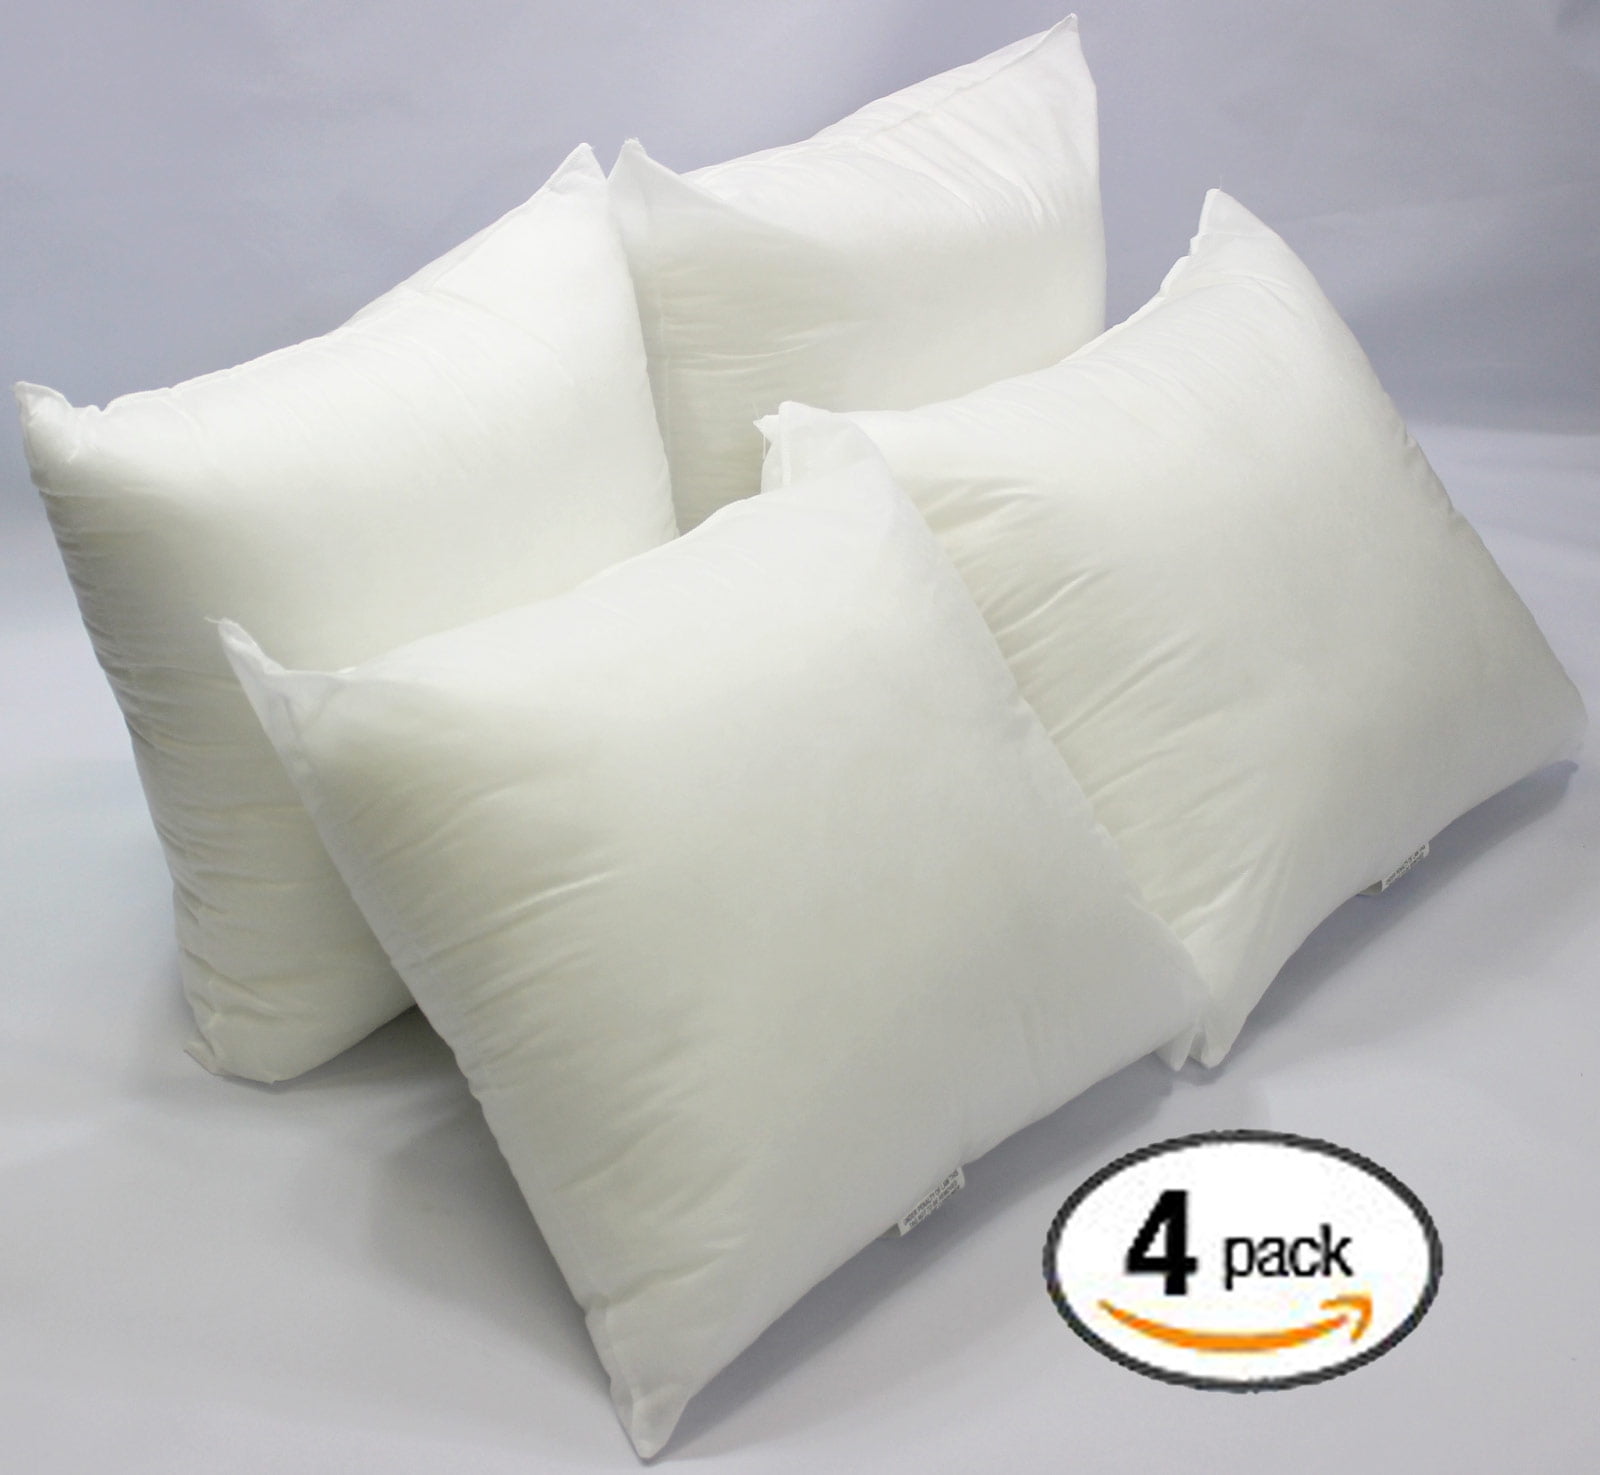 Ram Home (TM) Pillow Insert White - 18x18 Inch. Polyester Made